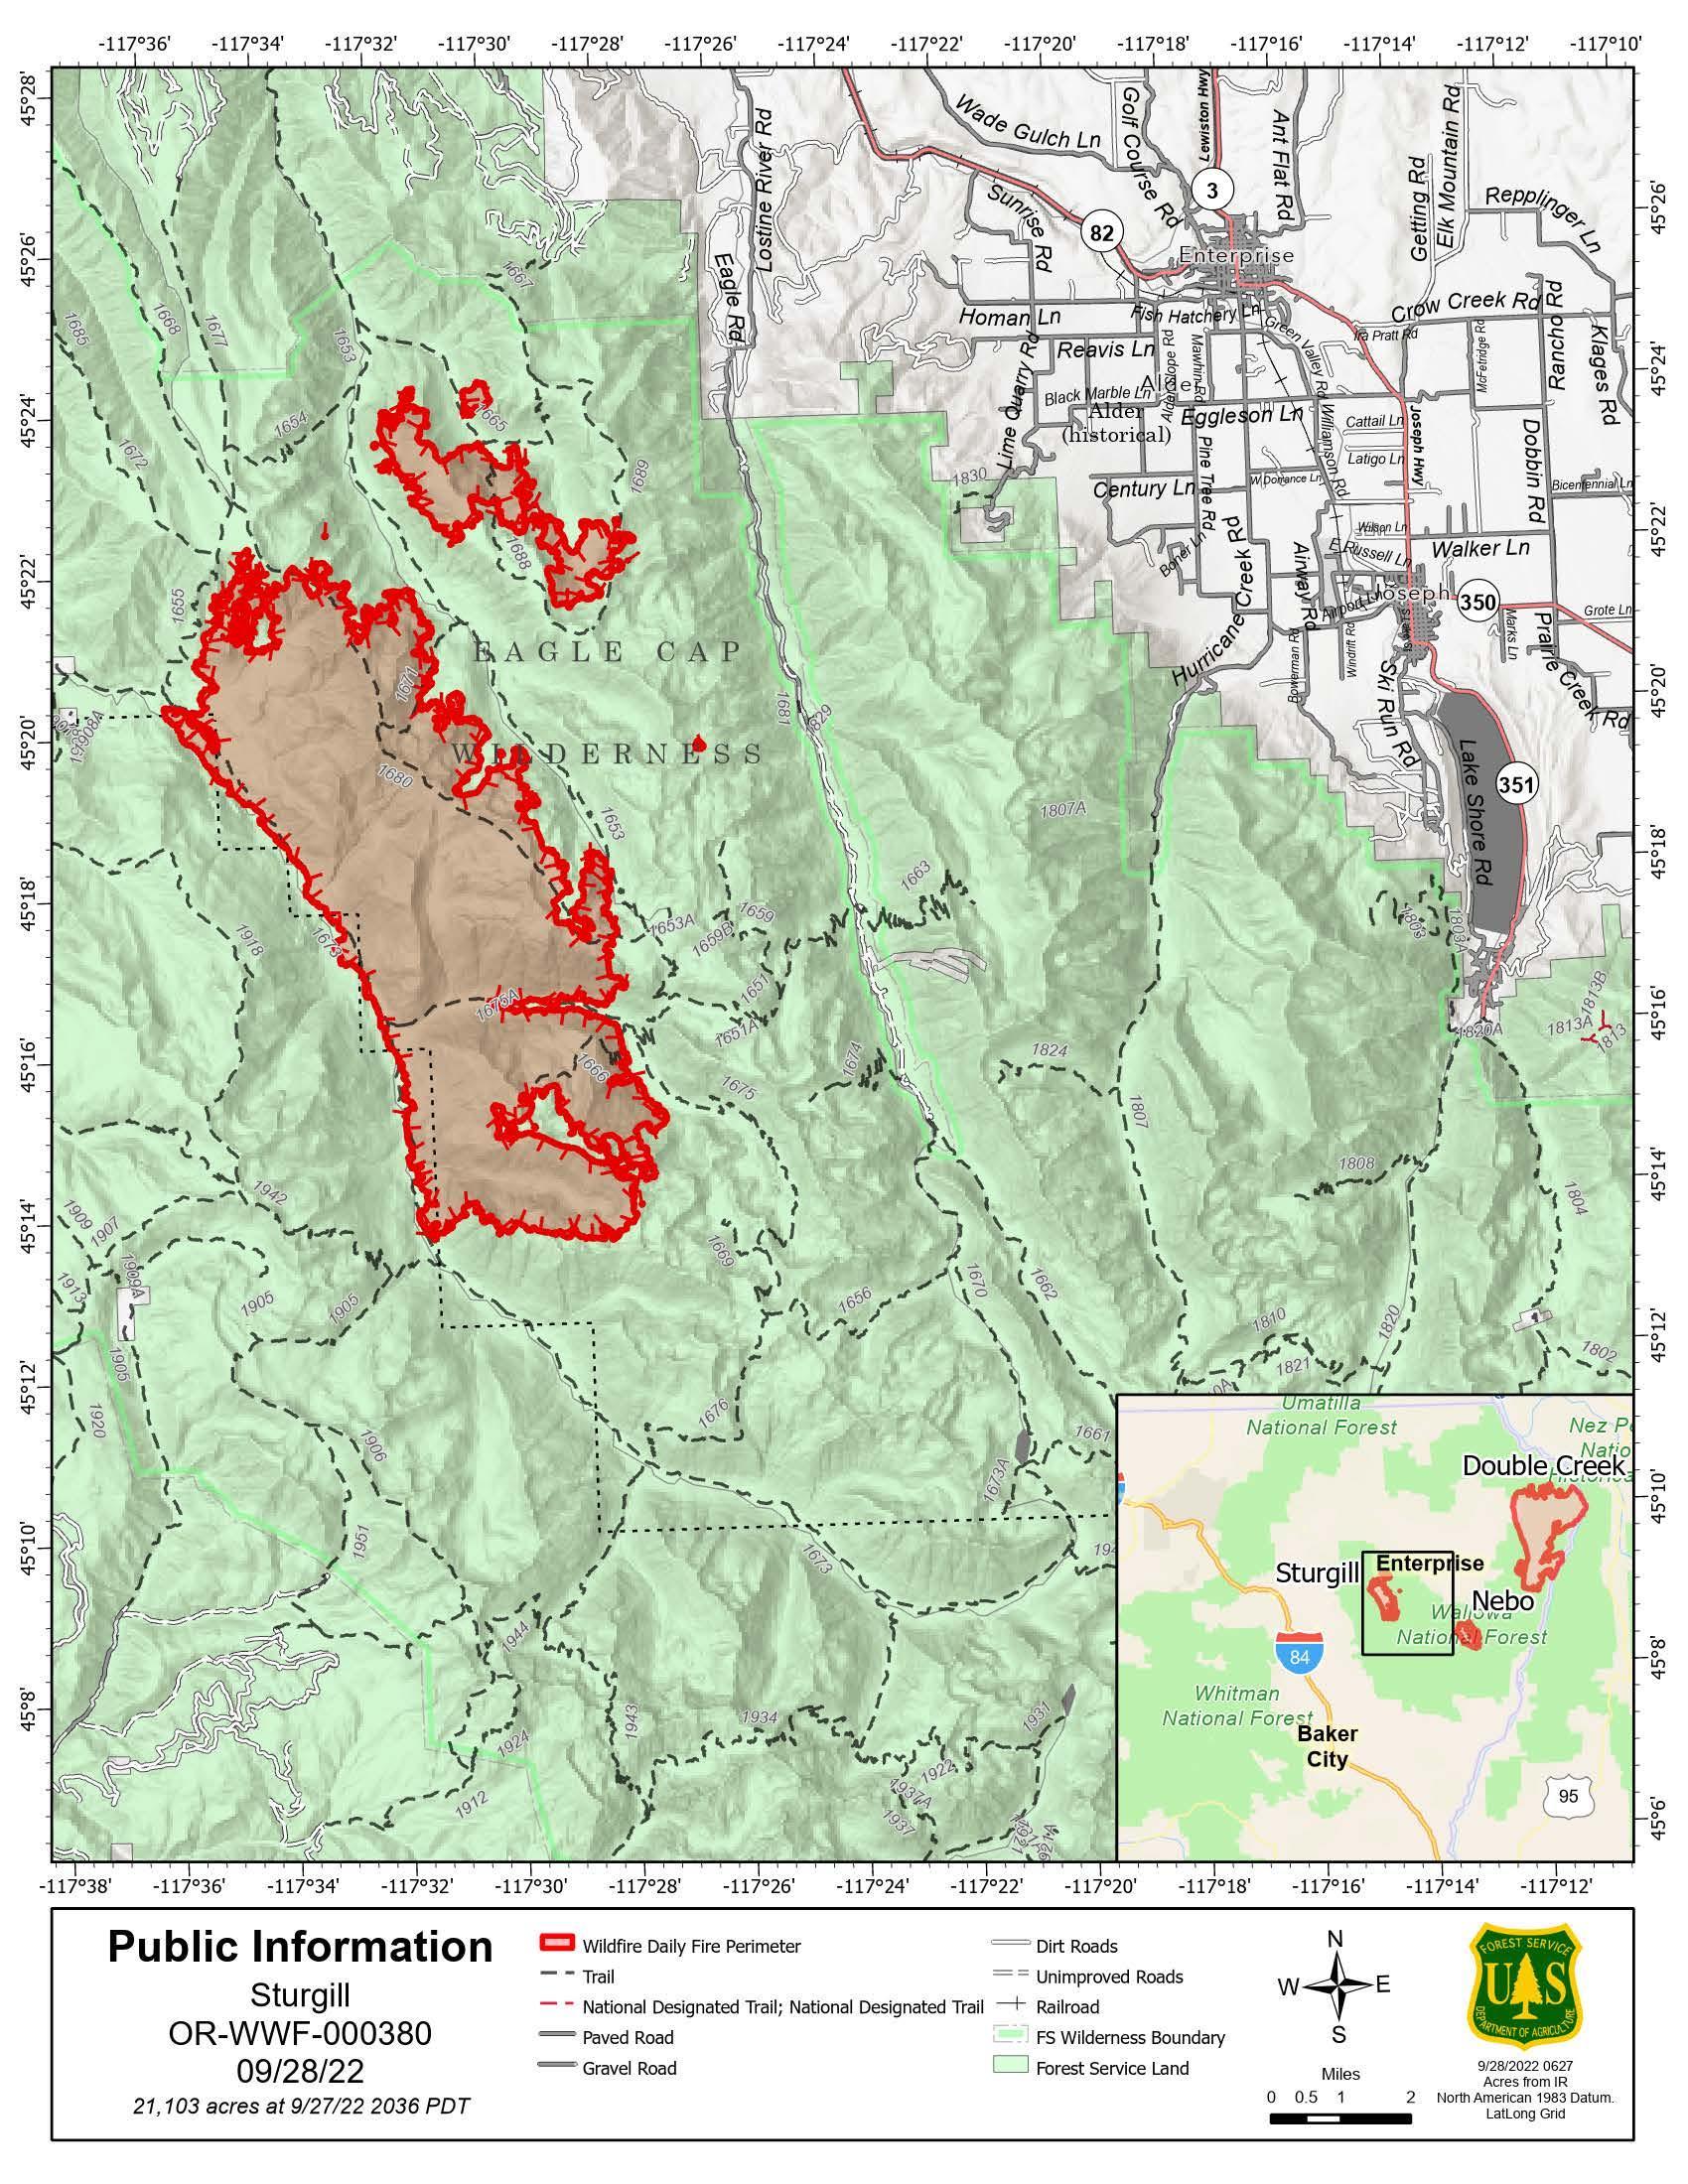 Sturgill Fire Map - 09/28/2022